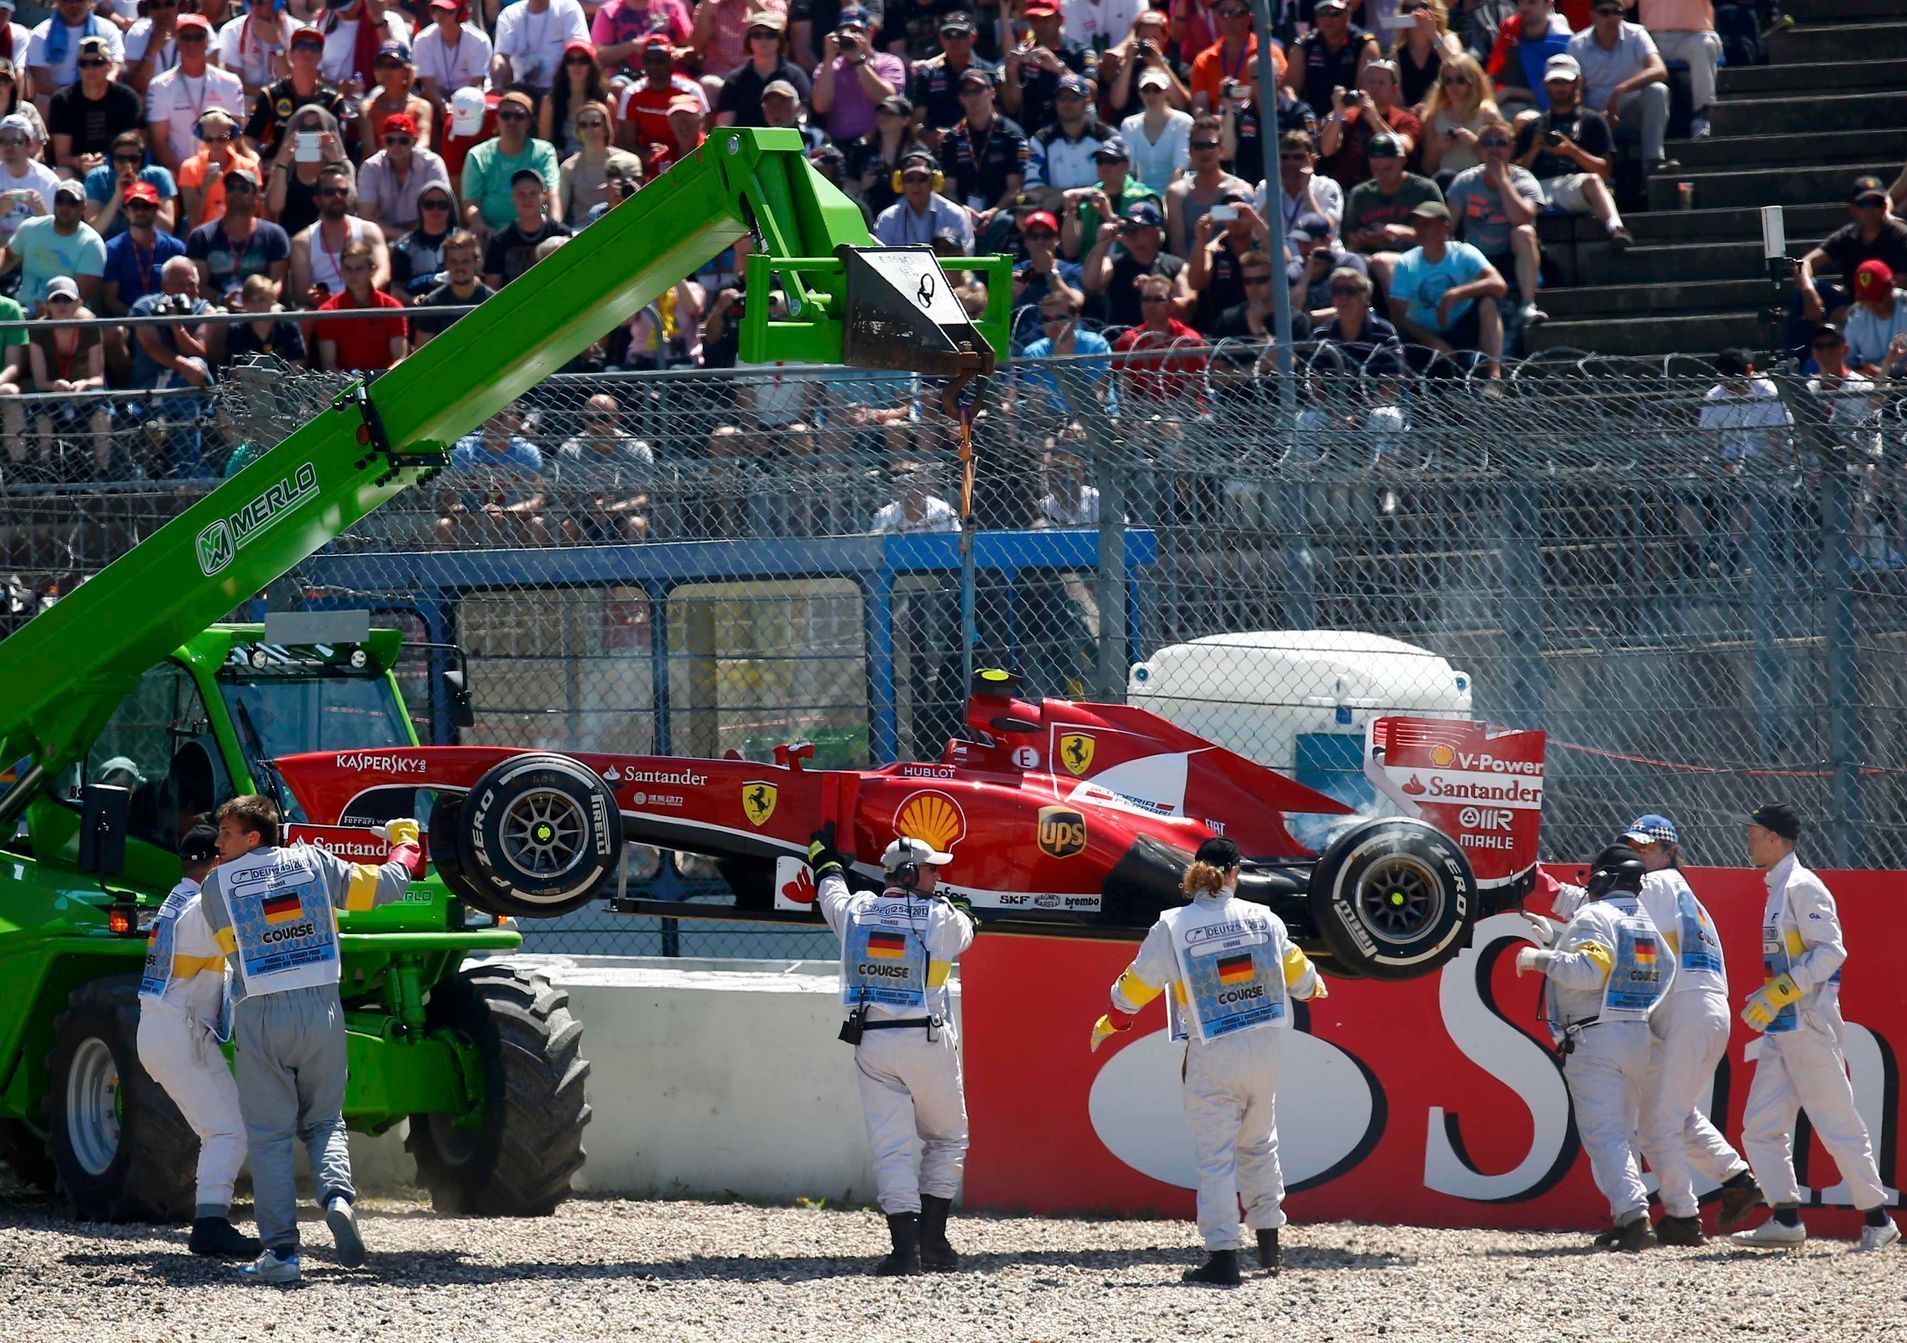 Formule 1, VC Německa 2013: Felipe Massa, Ferrari